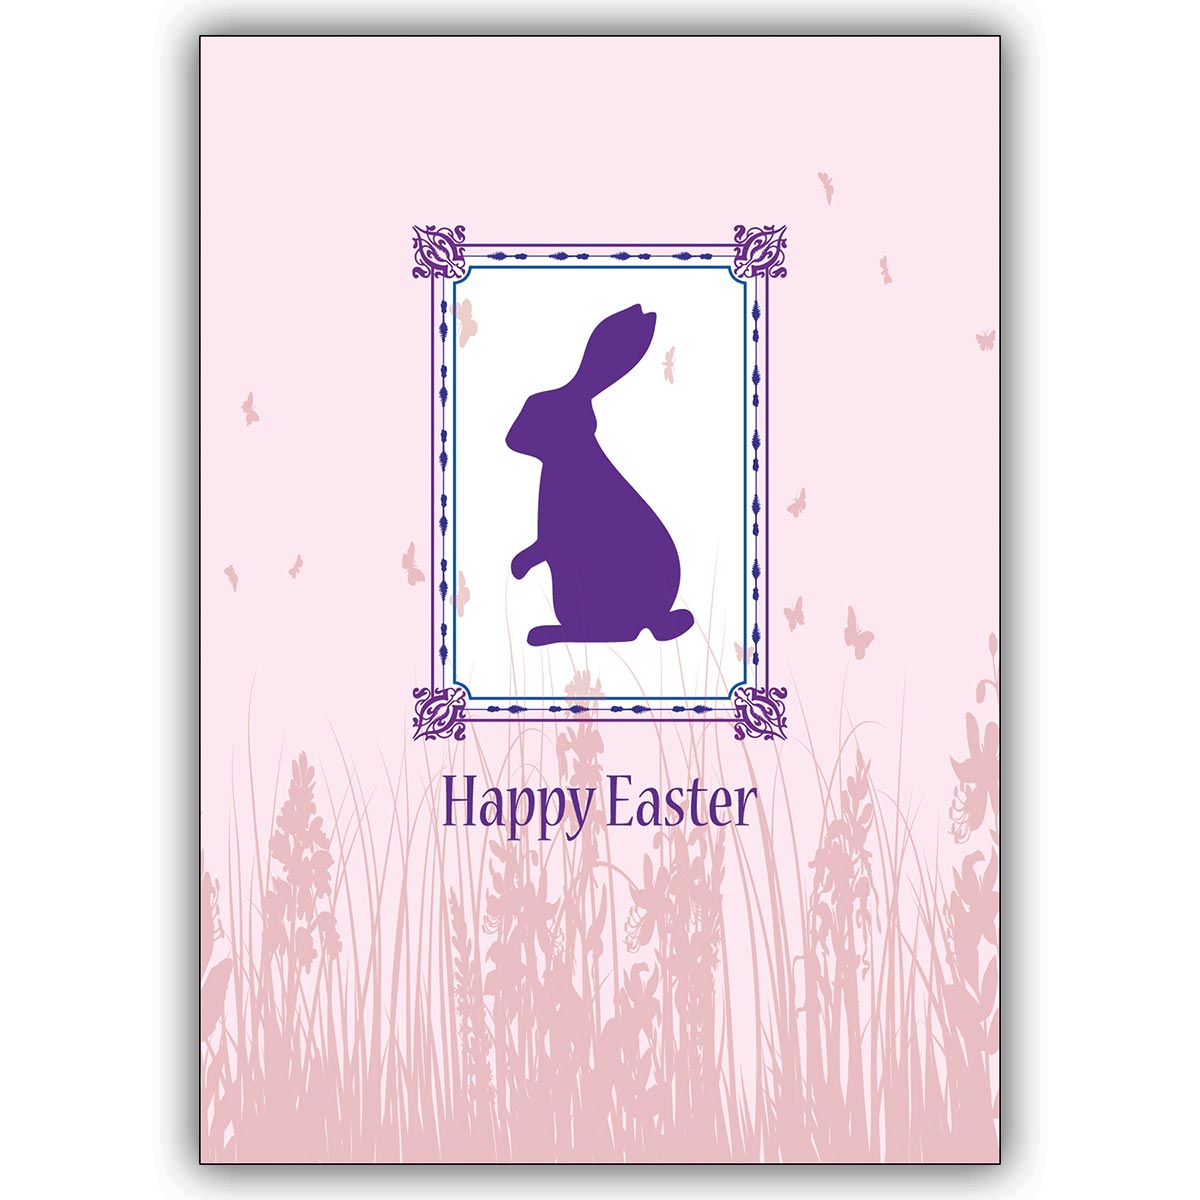 Süße Oster Grußkarte in rosa mit kleinem Hasen in lila: Happy Easter